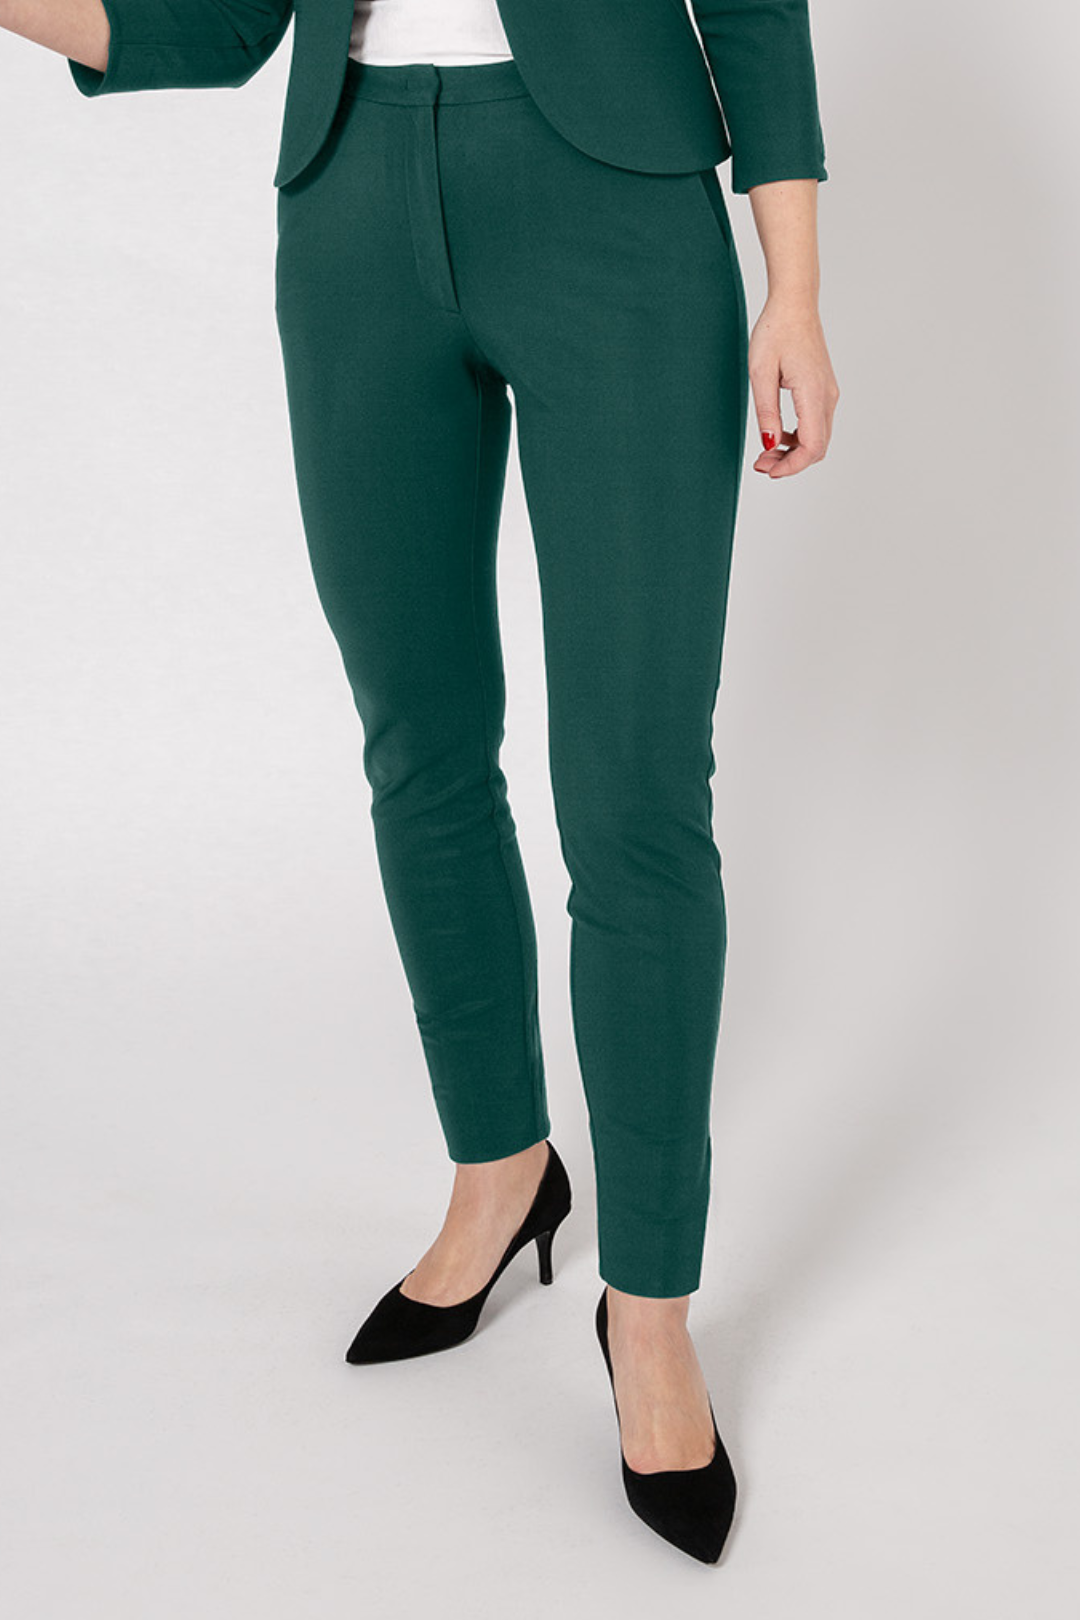 Buy Green Trousers & Pants for Women by SCOTCH & SODA Online | Ajio.com